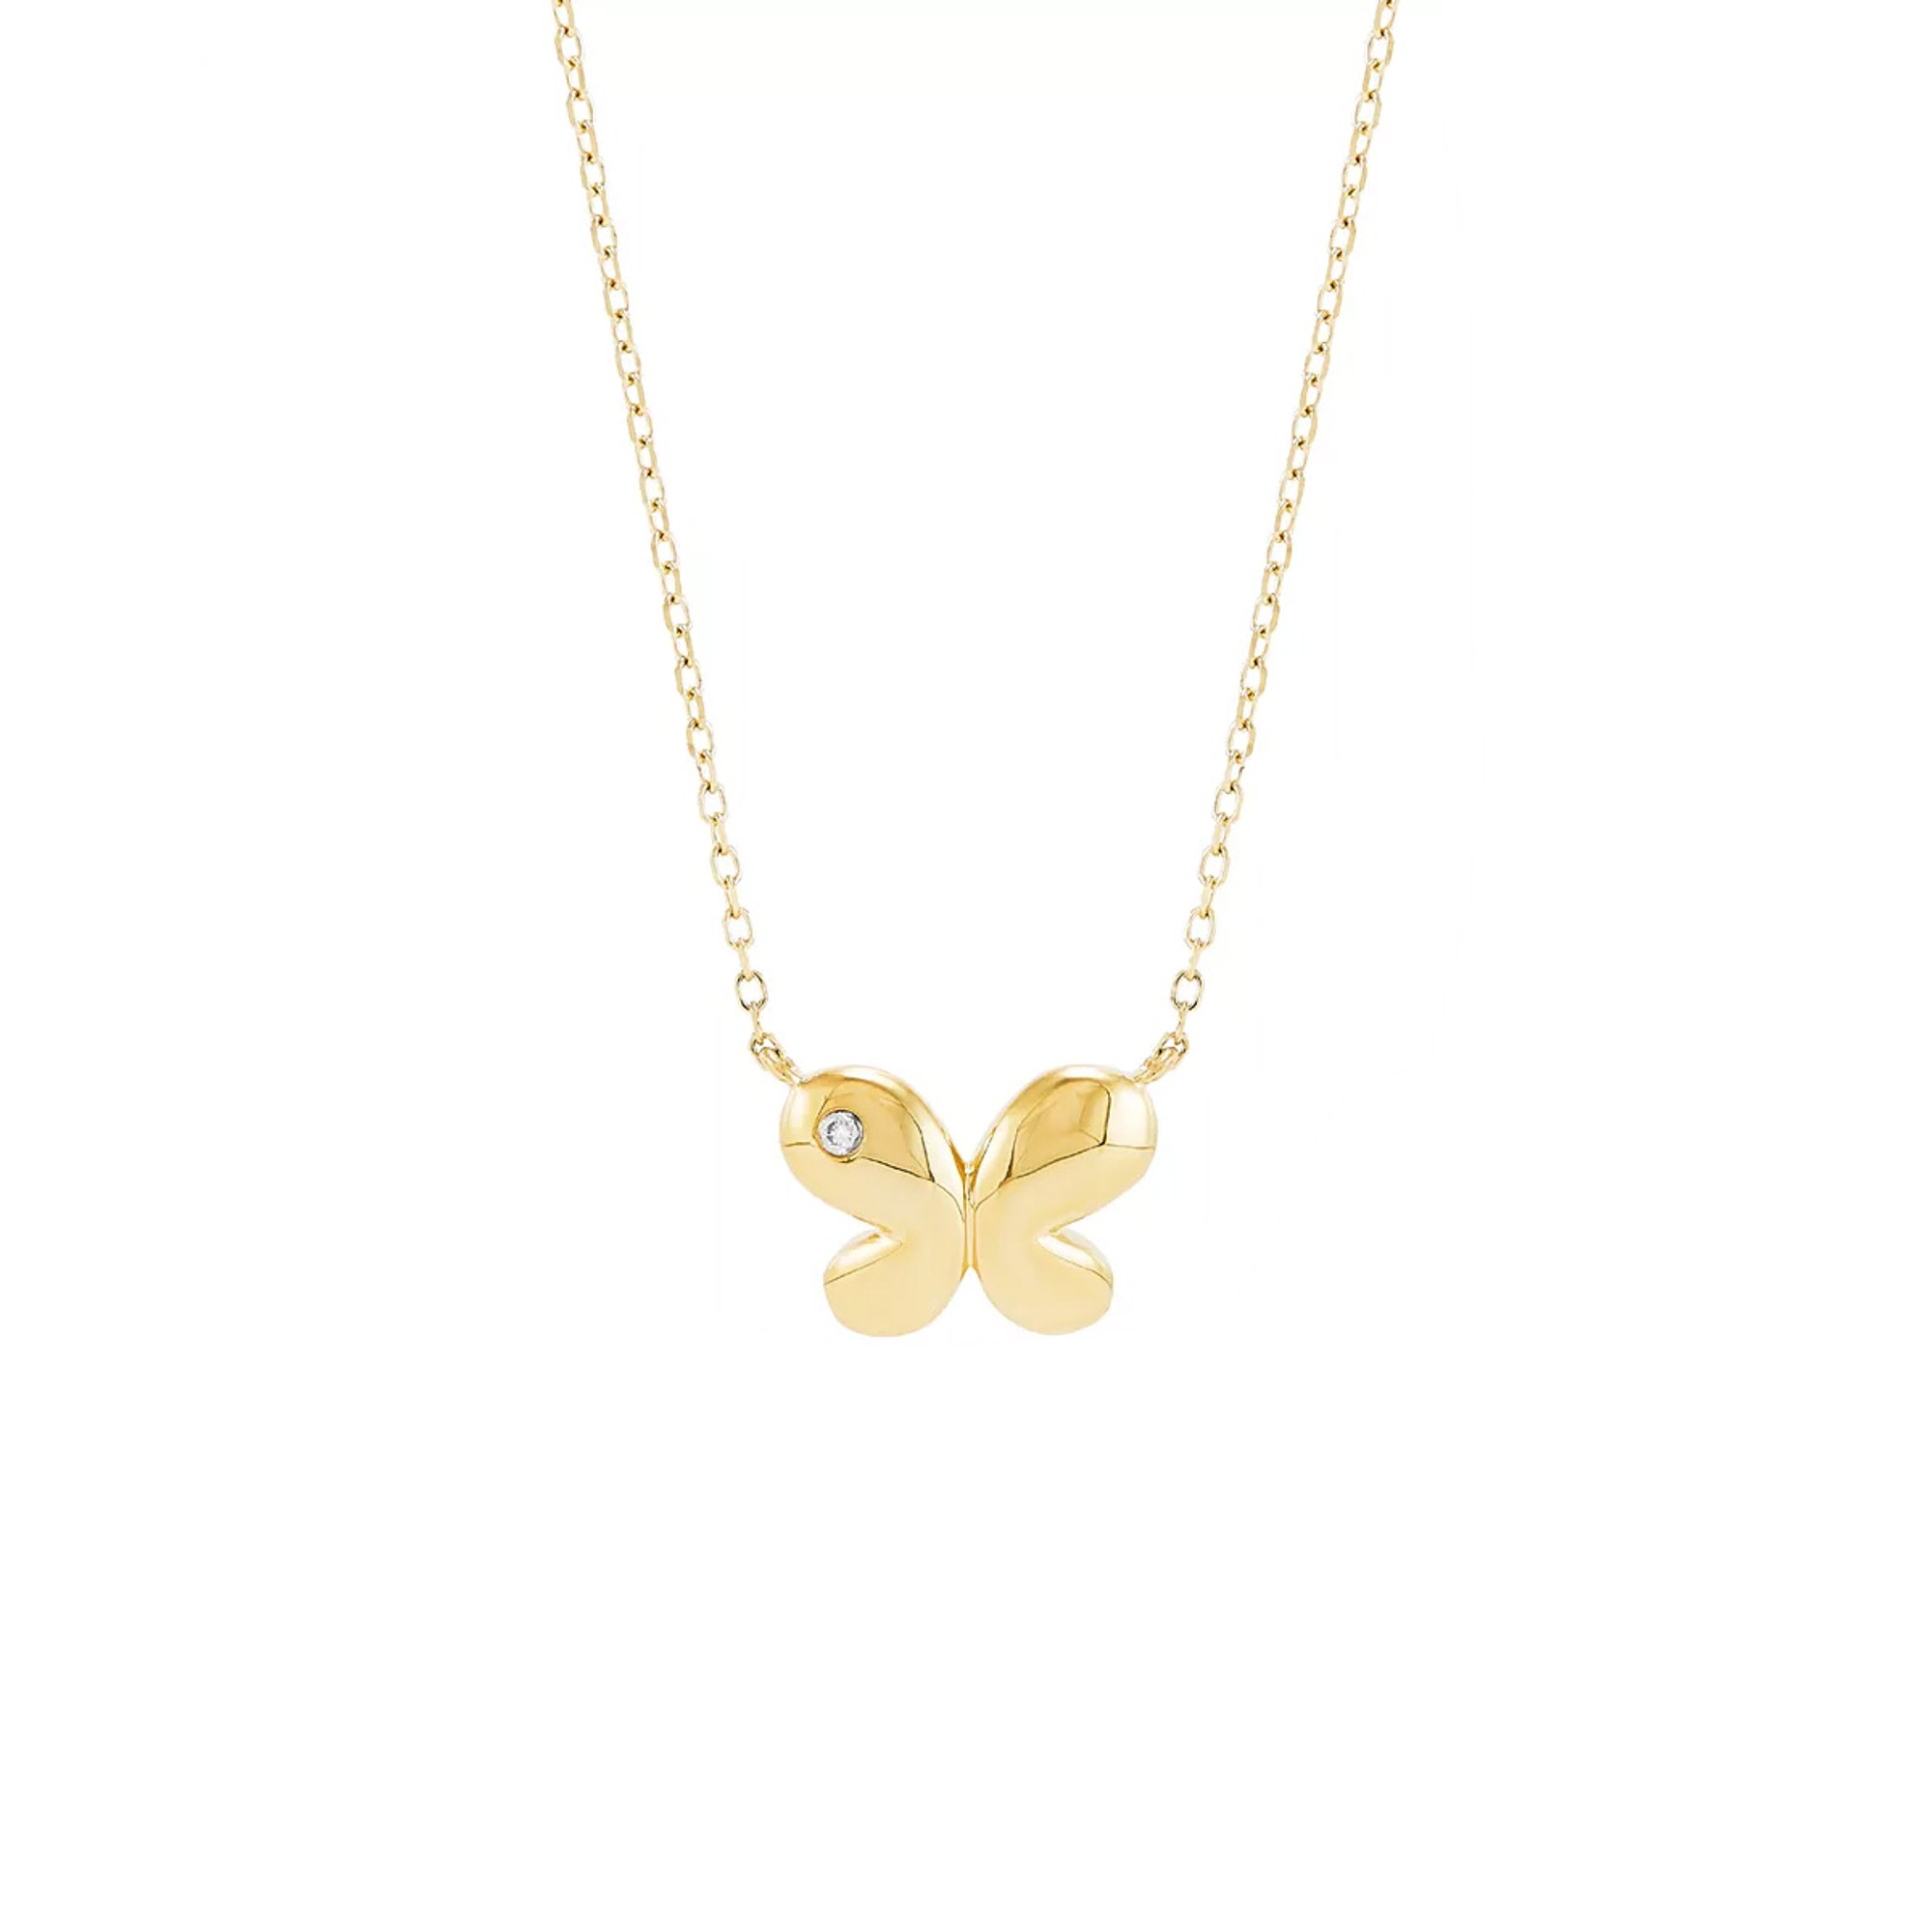 10k Yellow Gold Diamond Angel Pendant 0.15 Ctw – Avianne Jewelers